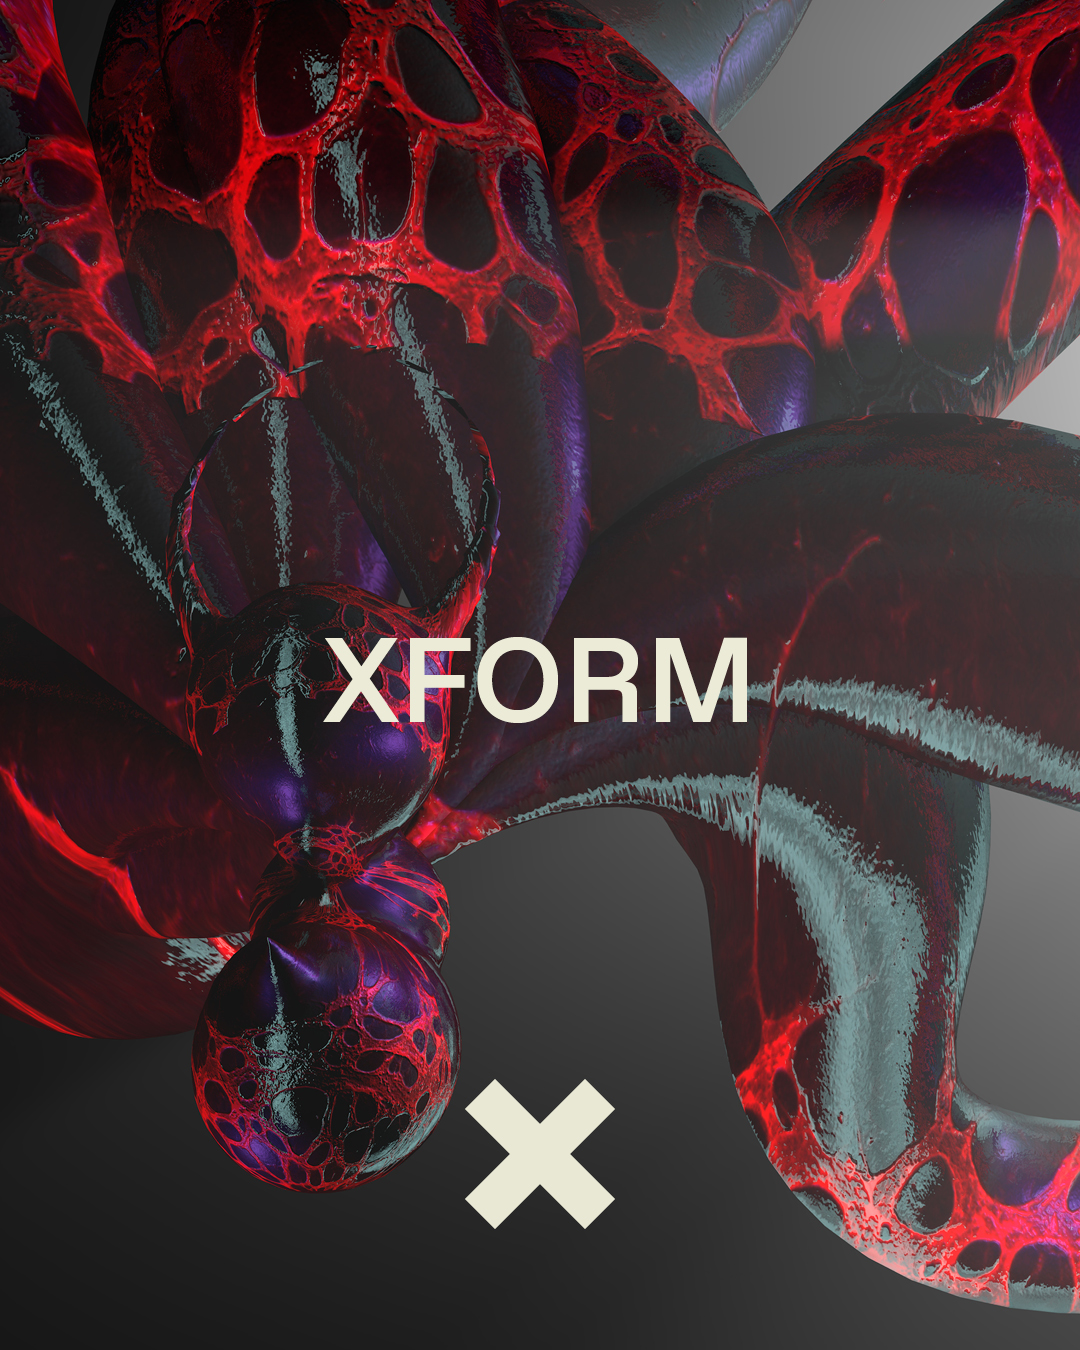 12.–14.11. | XFORM w/ Beatrice, Function, Kangding Ray, Kwartz, Sachsen Trance & Xiorro